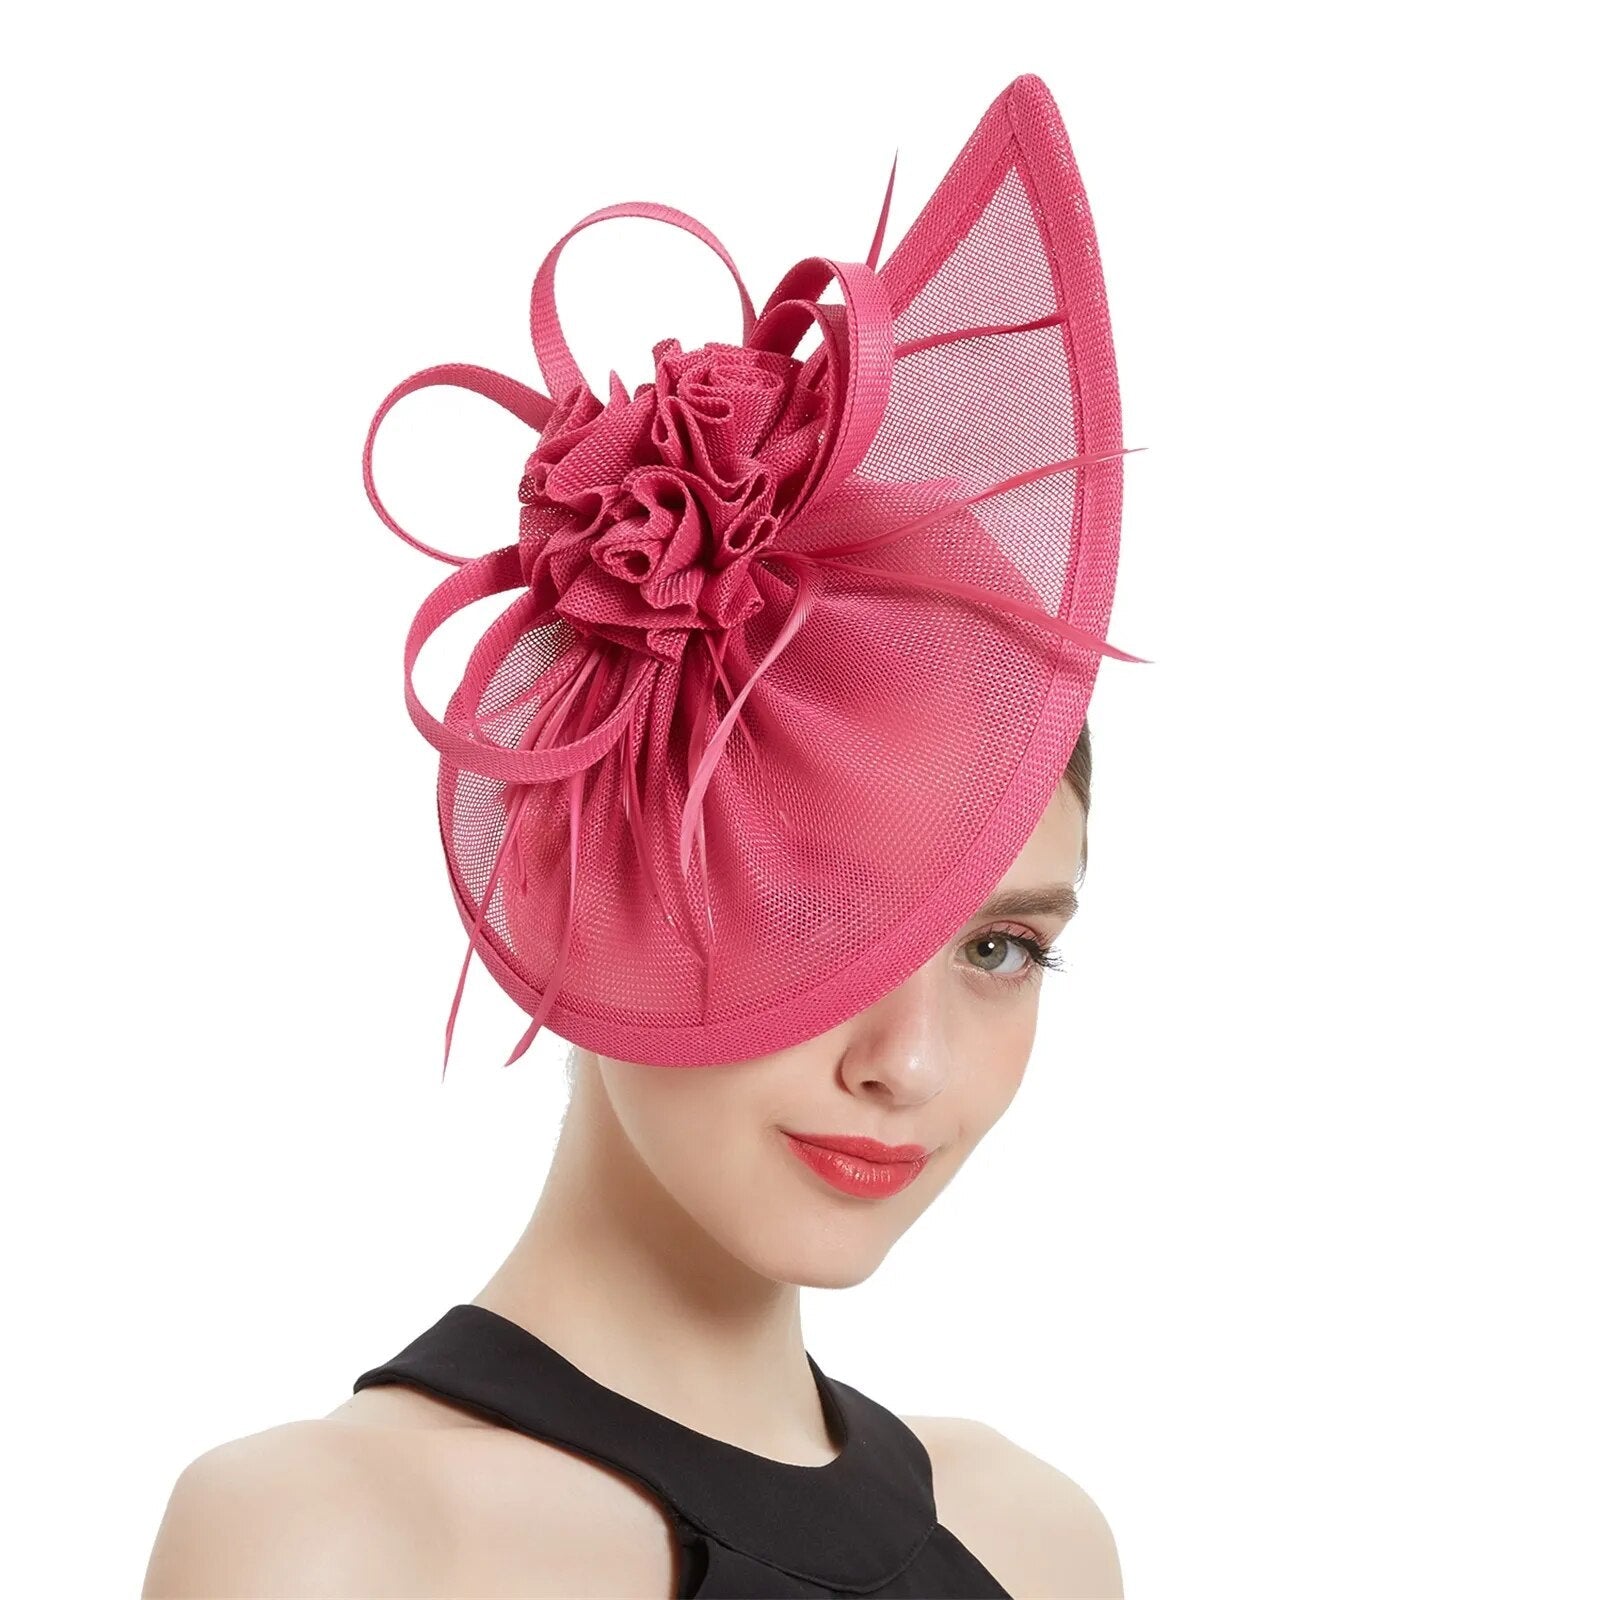 Londonisy Women Fascinator Headwear Wedding Party Hair Accessories-fascinator-Rose Red-All10dollars.com